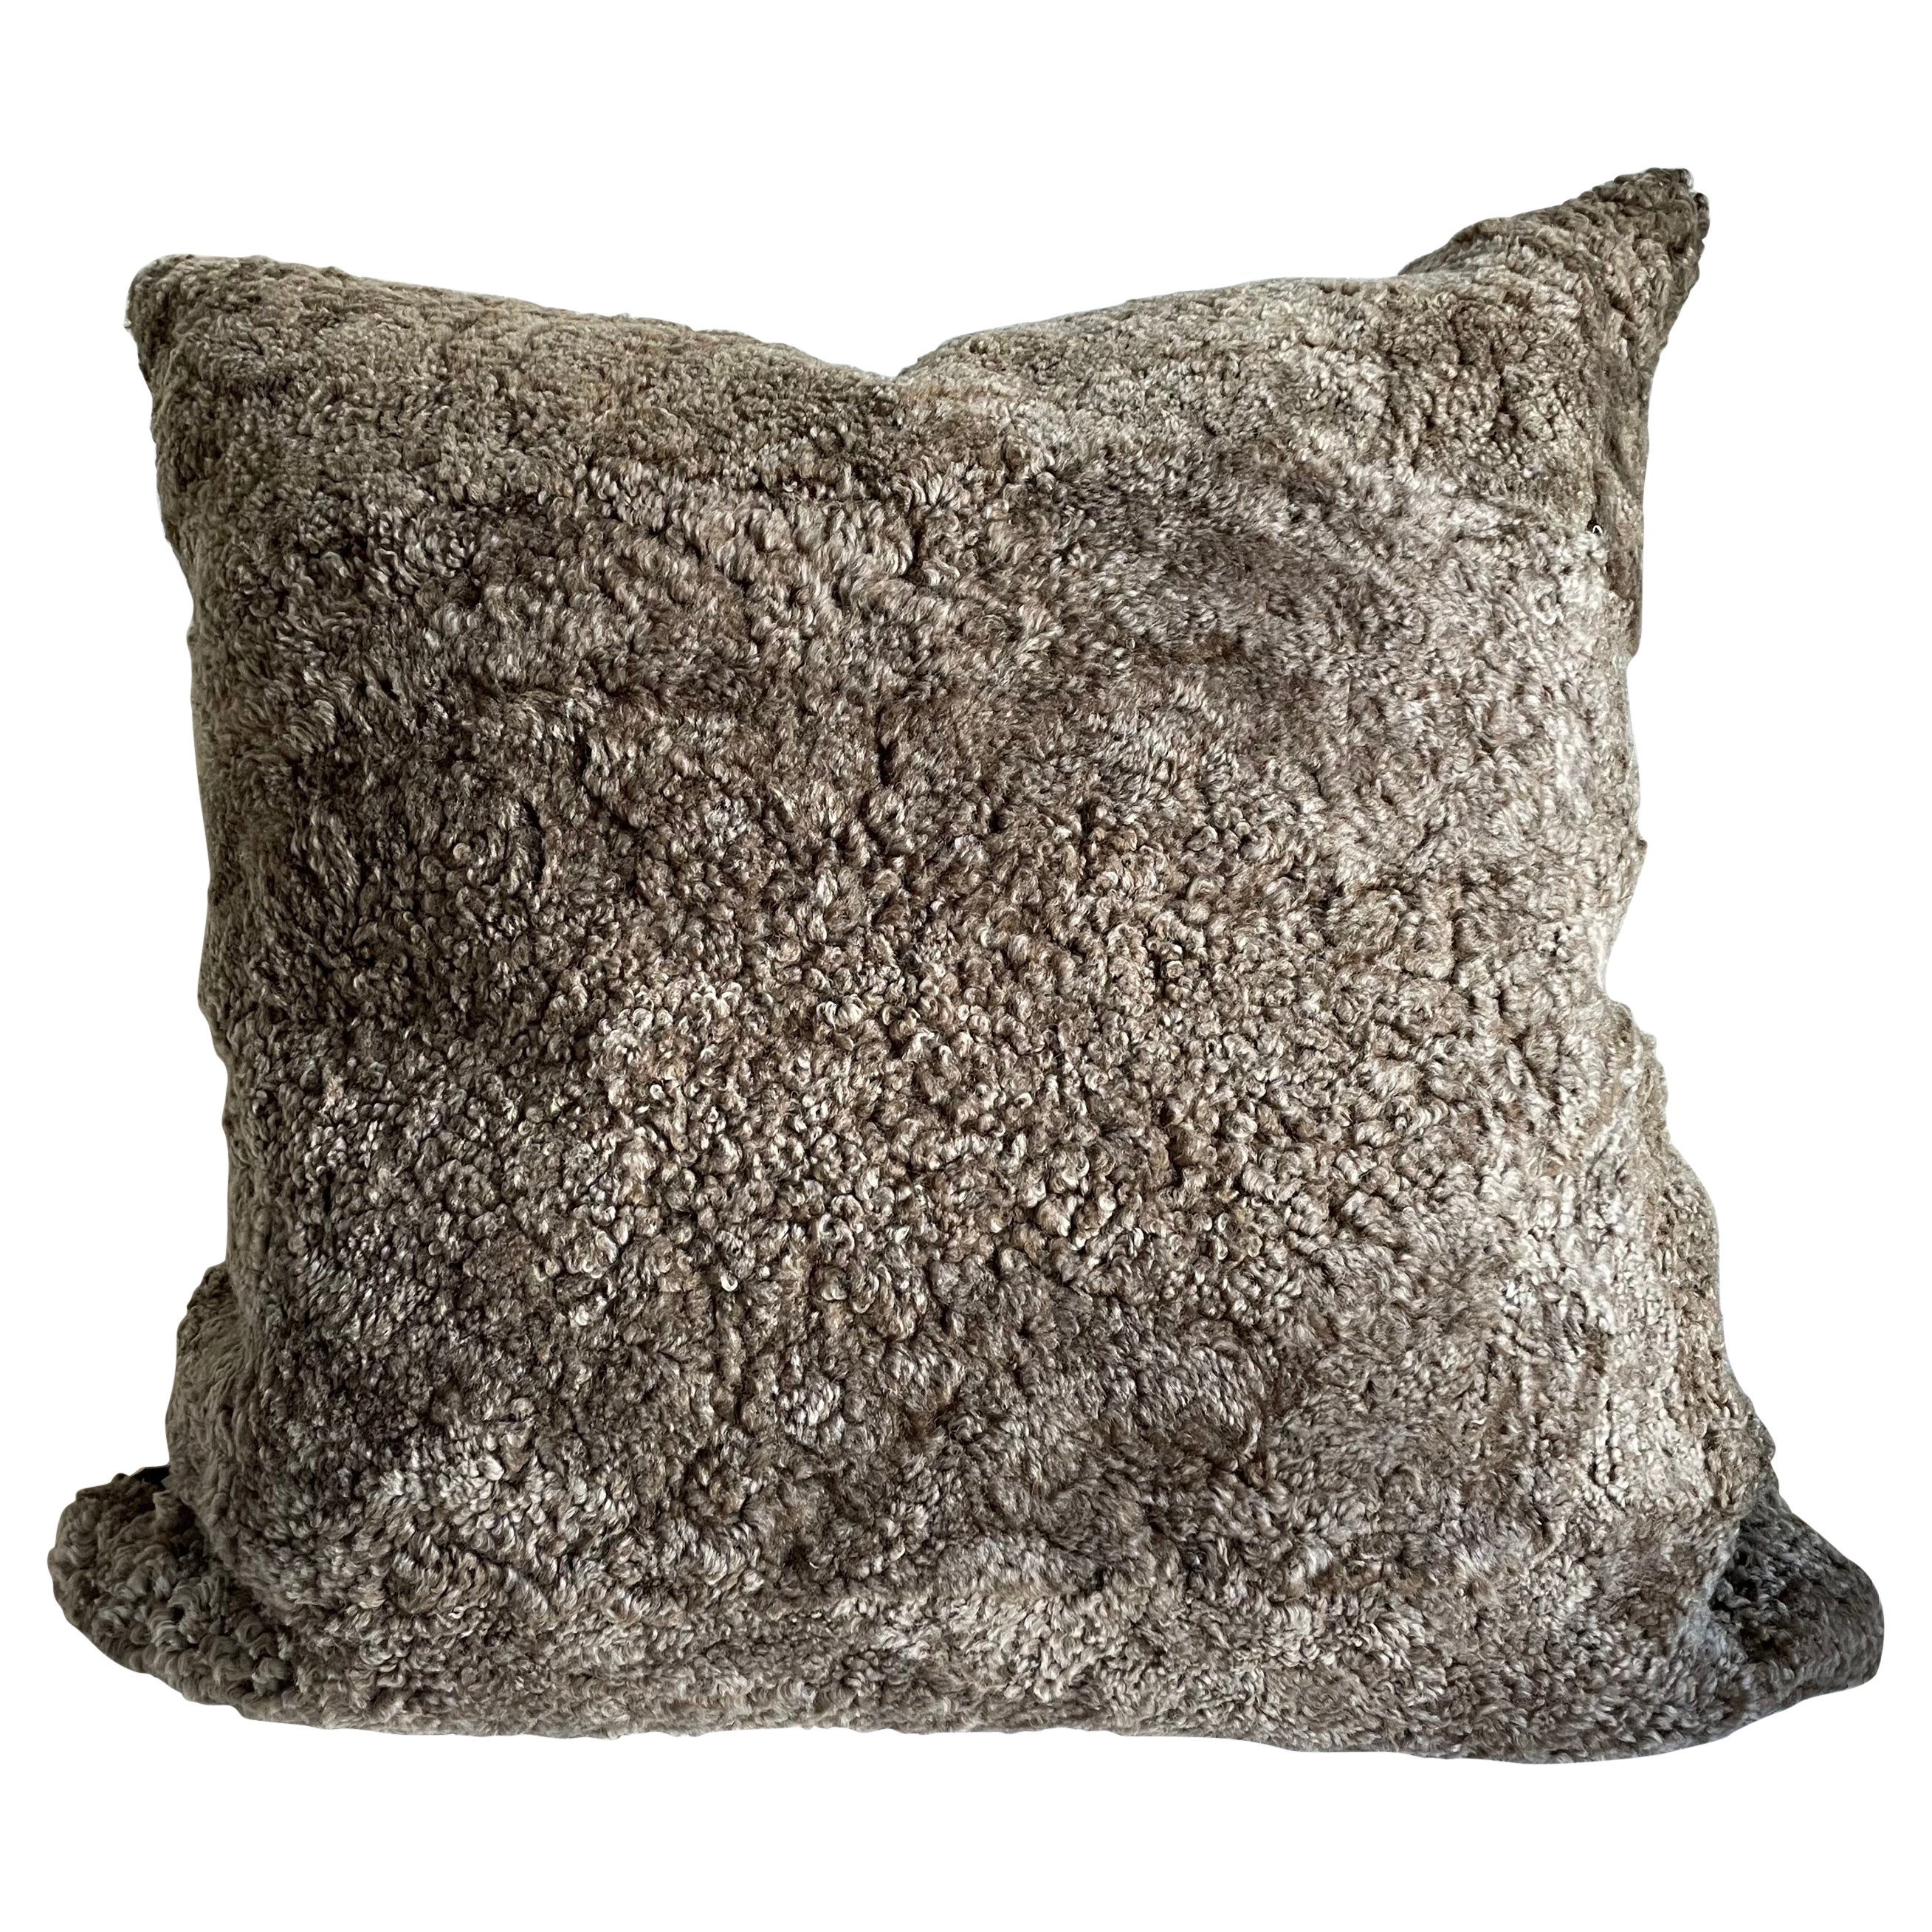 Genuine Plush Curly Sheepskin Accent Pillow